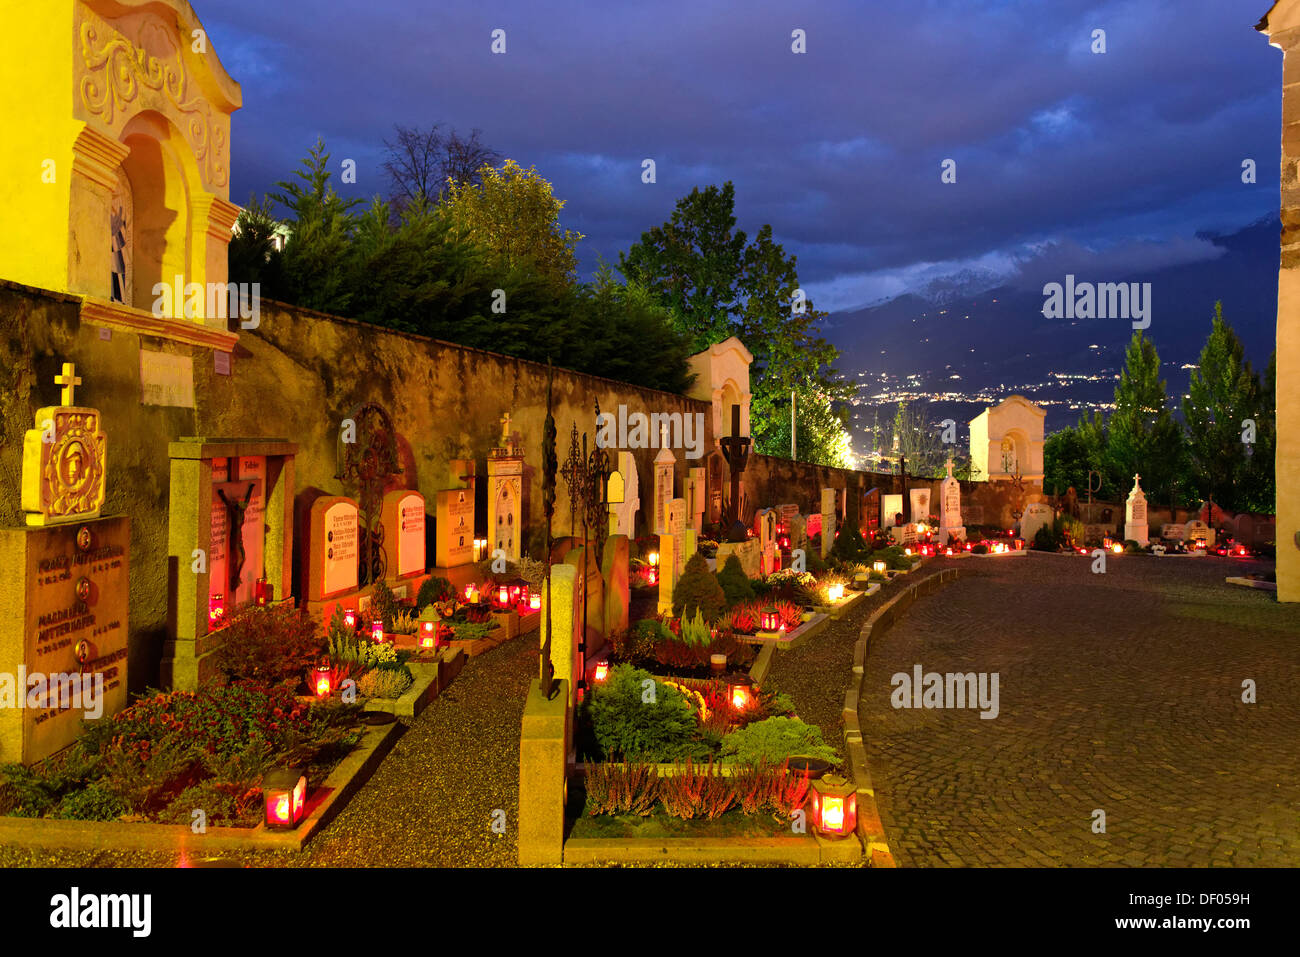 Cemetery at night, Marling, Marling, Burggrafenamt, South Tyrol province, Trentino-Alto Adige, Italy Stock Photo